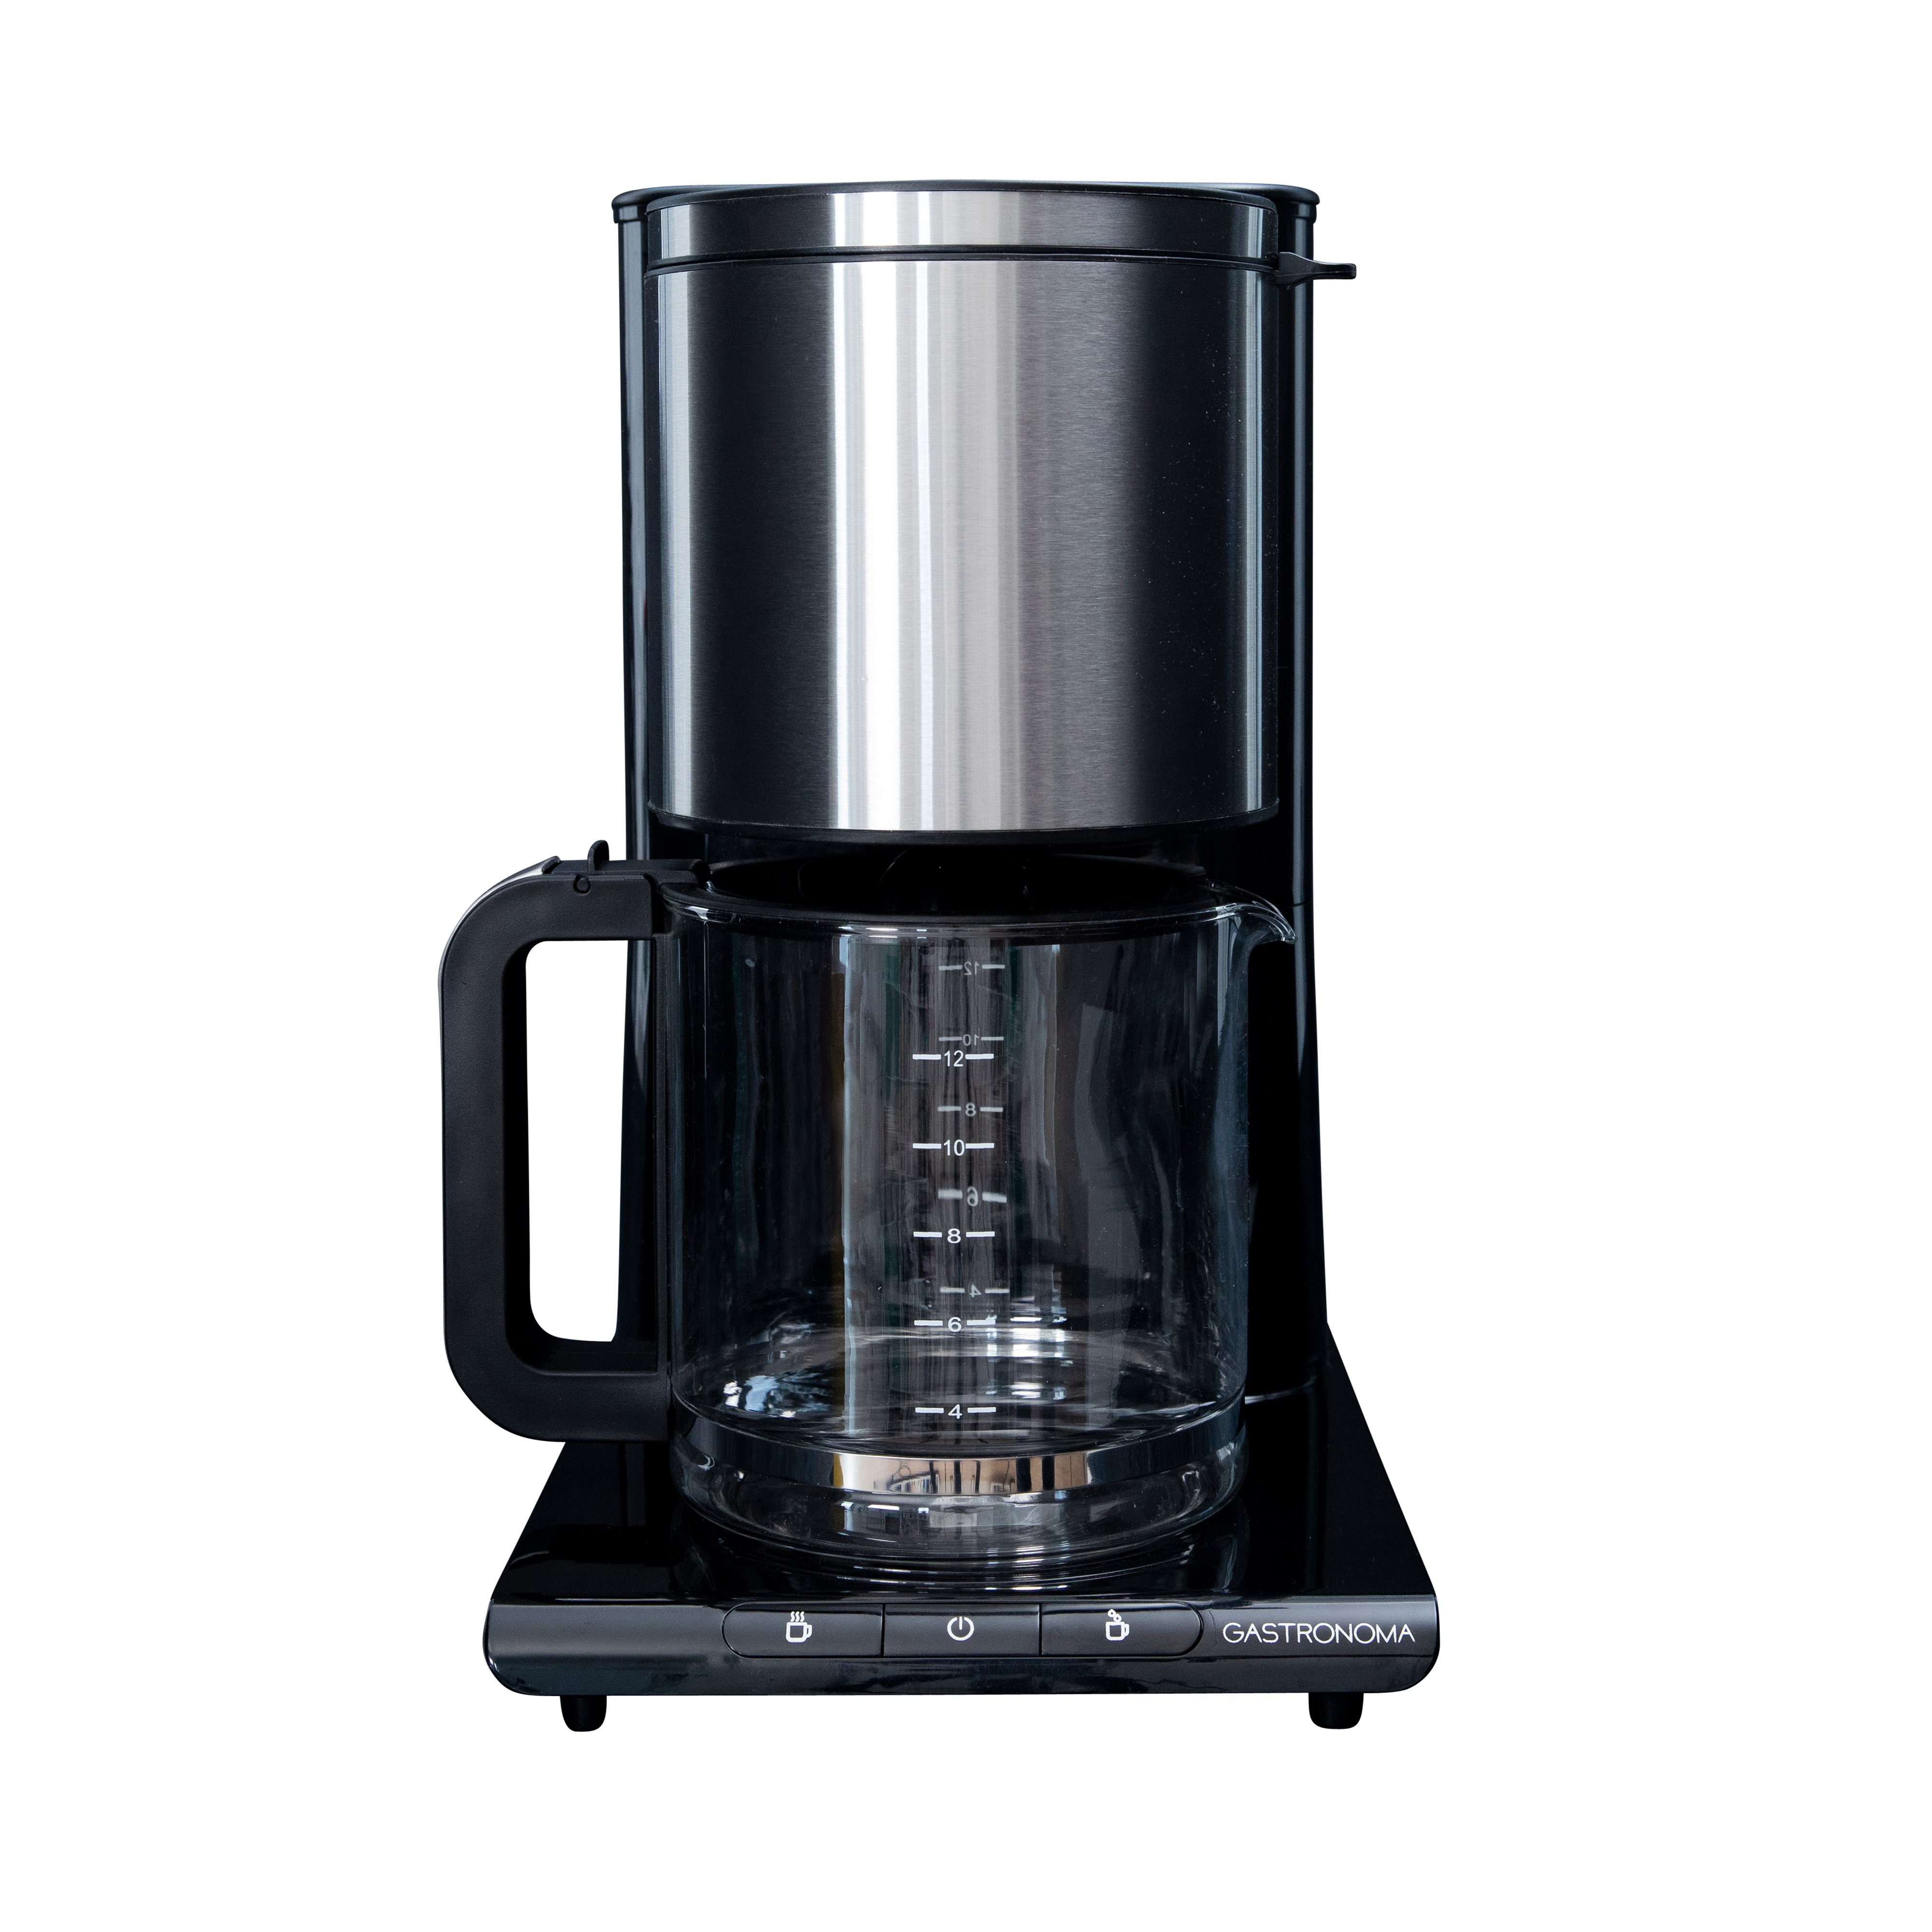 Filterkaffeemaschine (10-12 Tassen), 18100003, GASTRONOMA 1,5 Liter Kapazität 1050 Watt, Tropfstopp-Funktion